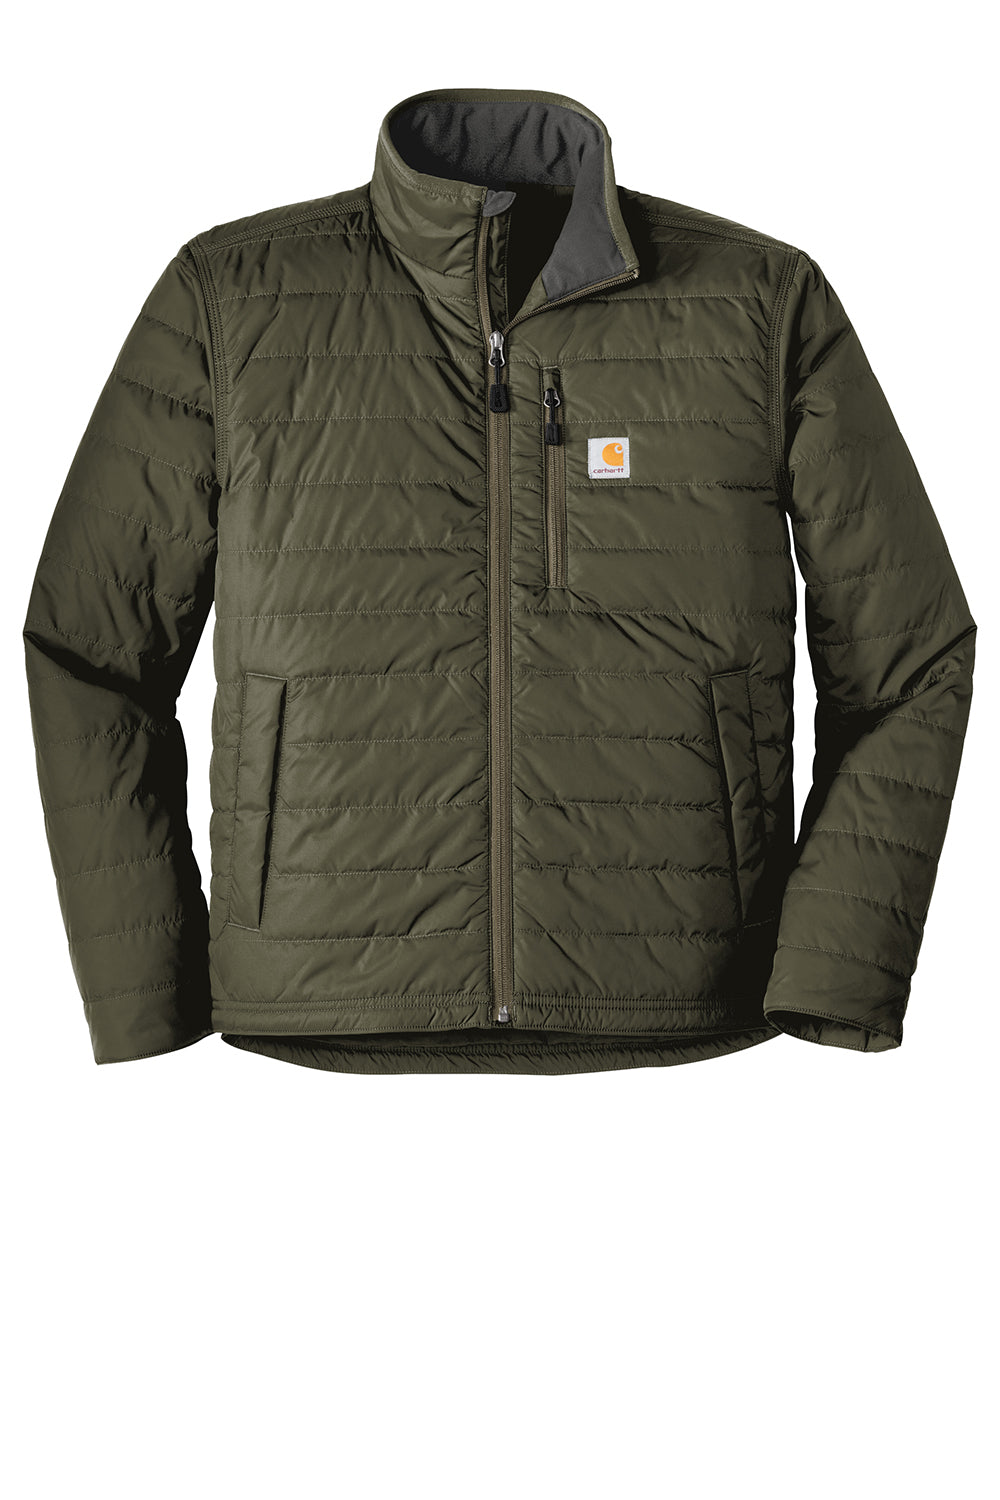 Carhartt CT102208 Mens Gilliam Wind & Water Resistant Full Zip Jacket Moss Green Flat Front